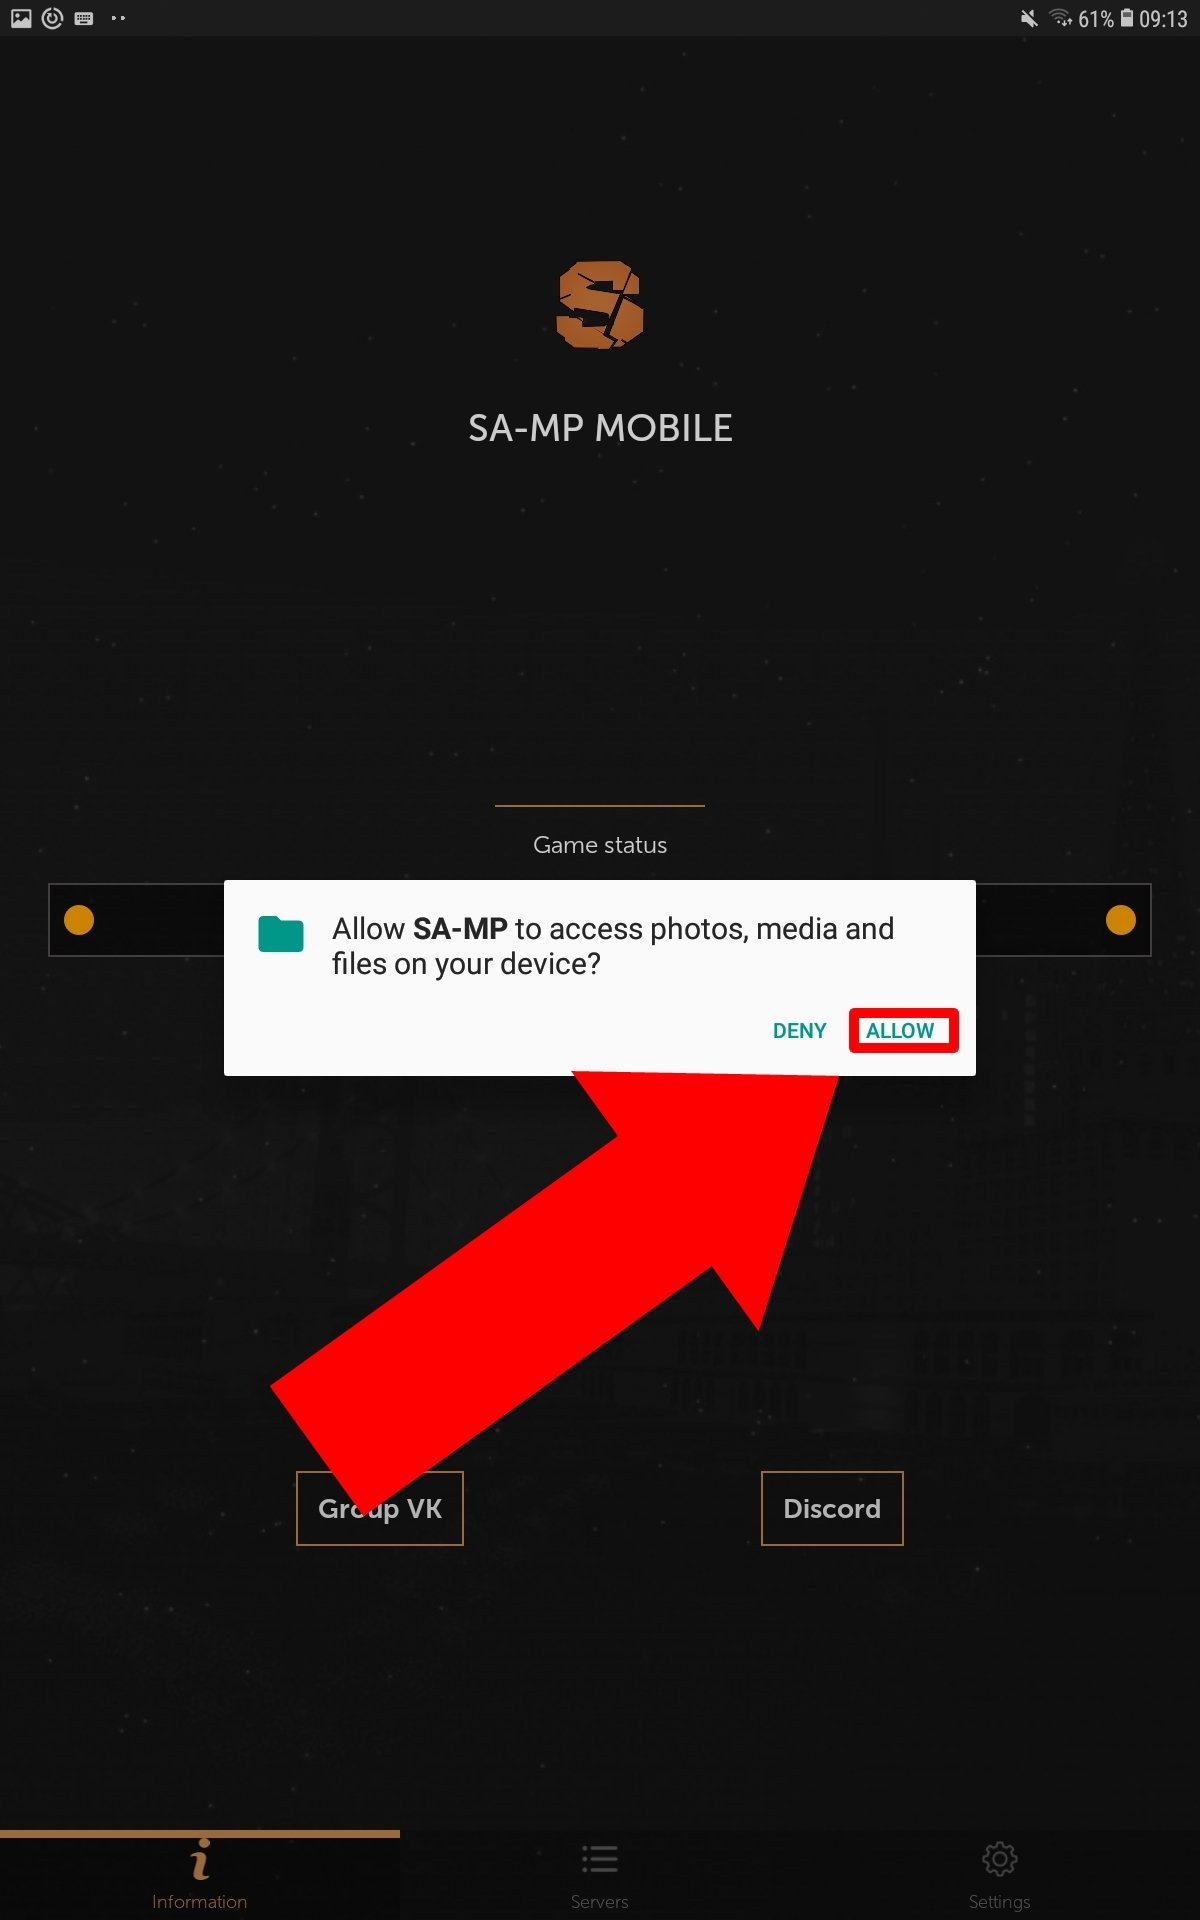 Press Allow to grant permissions to SA-MP Mobile